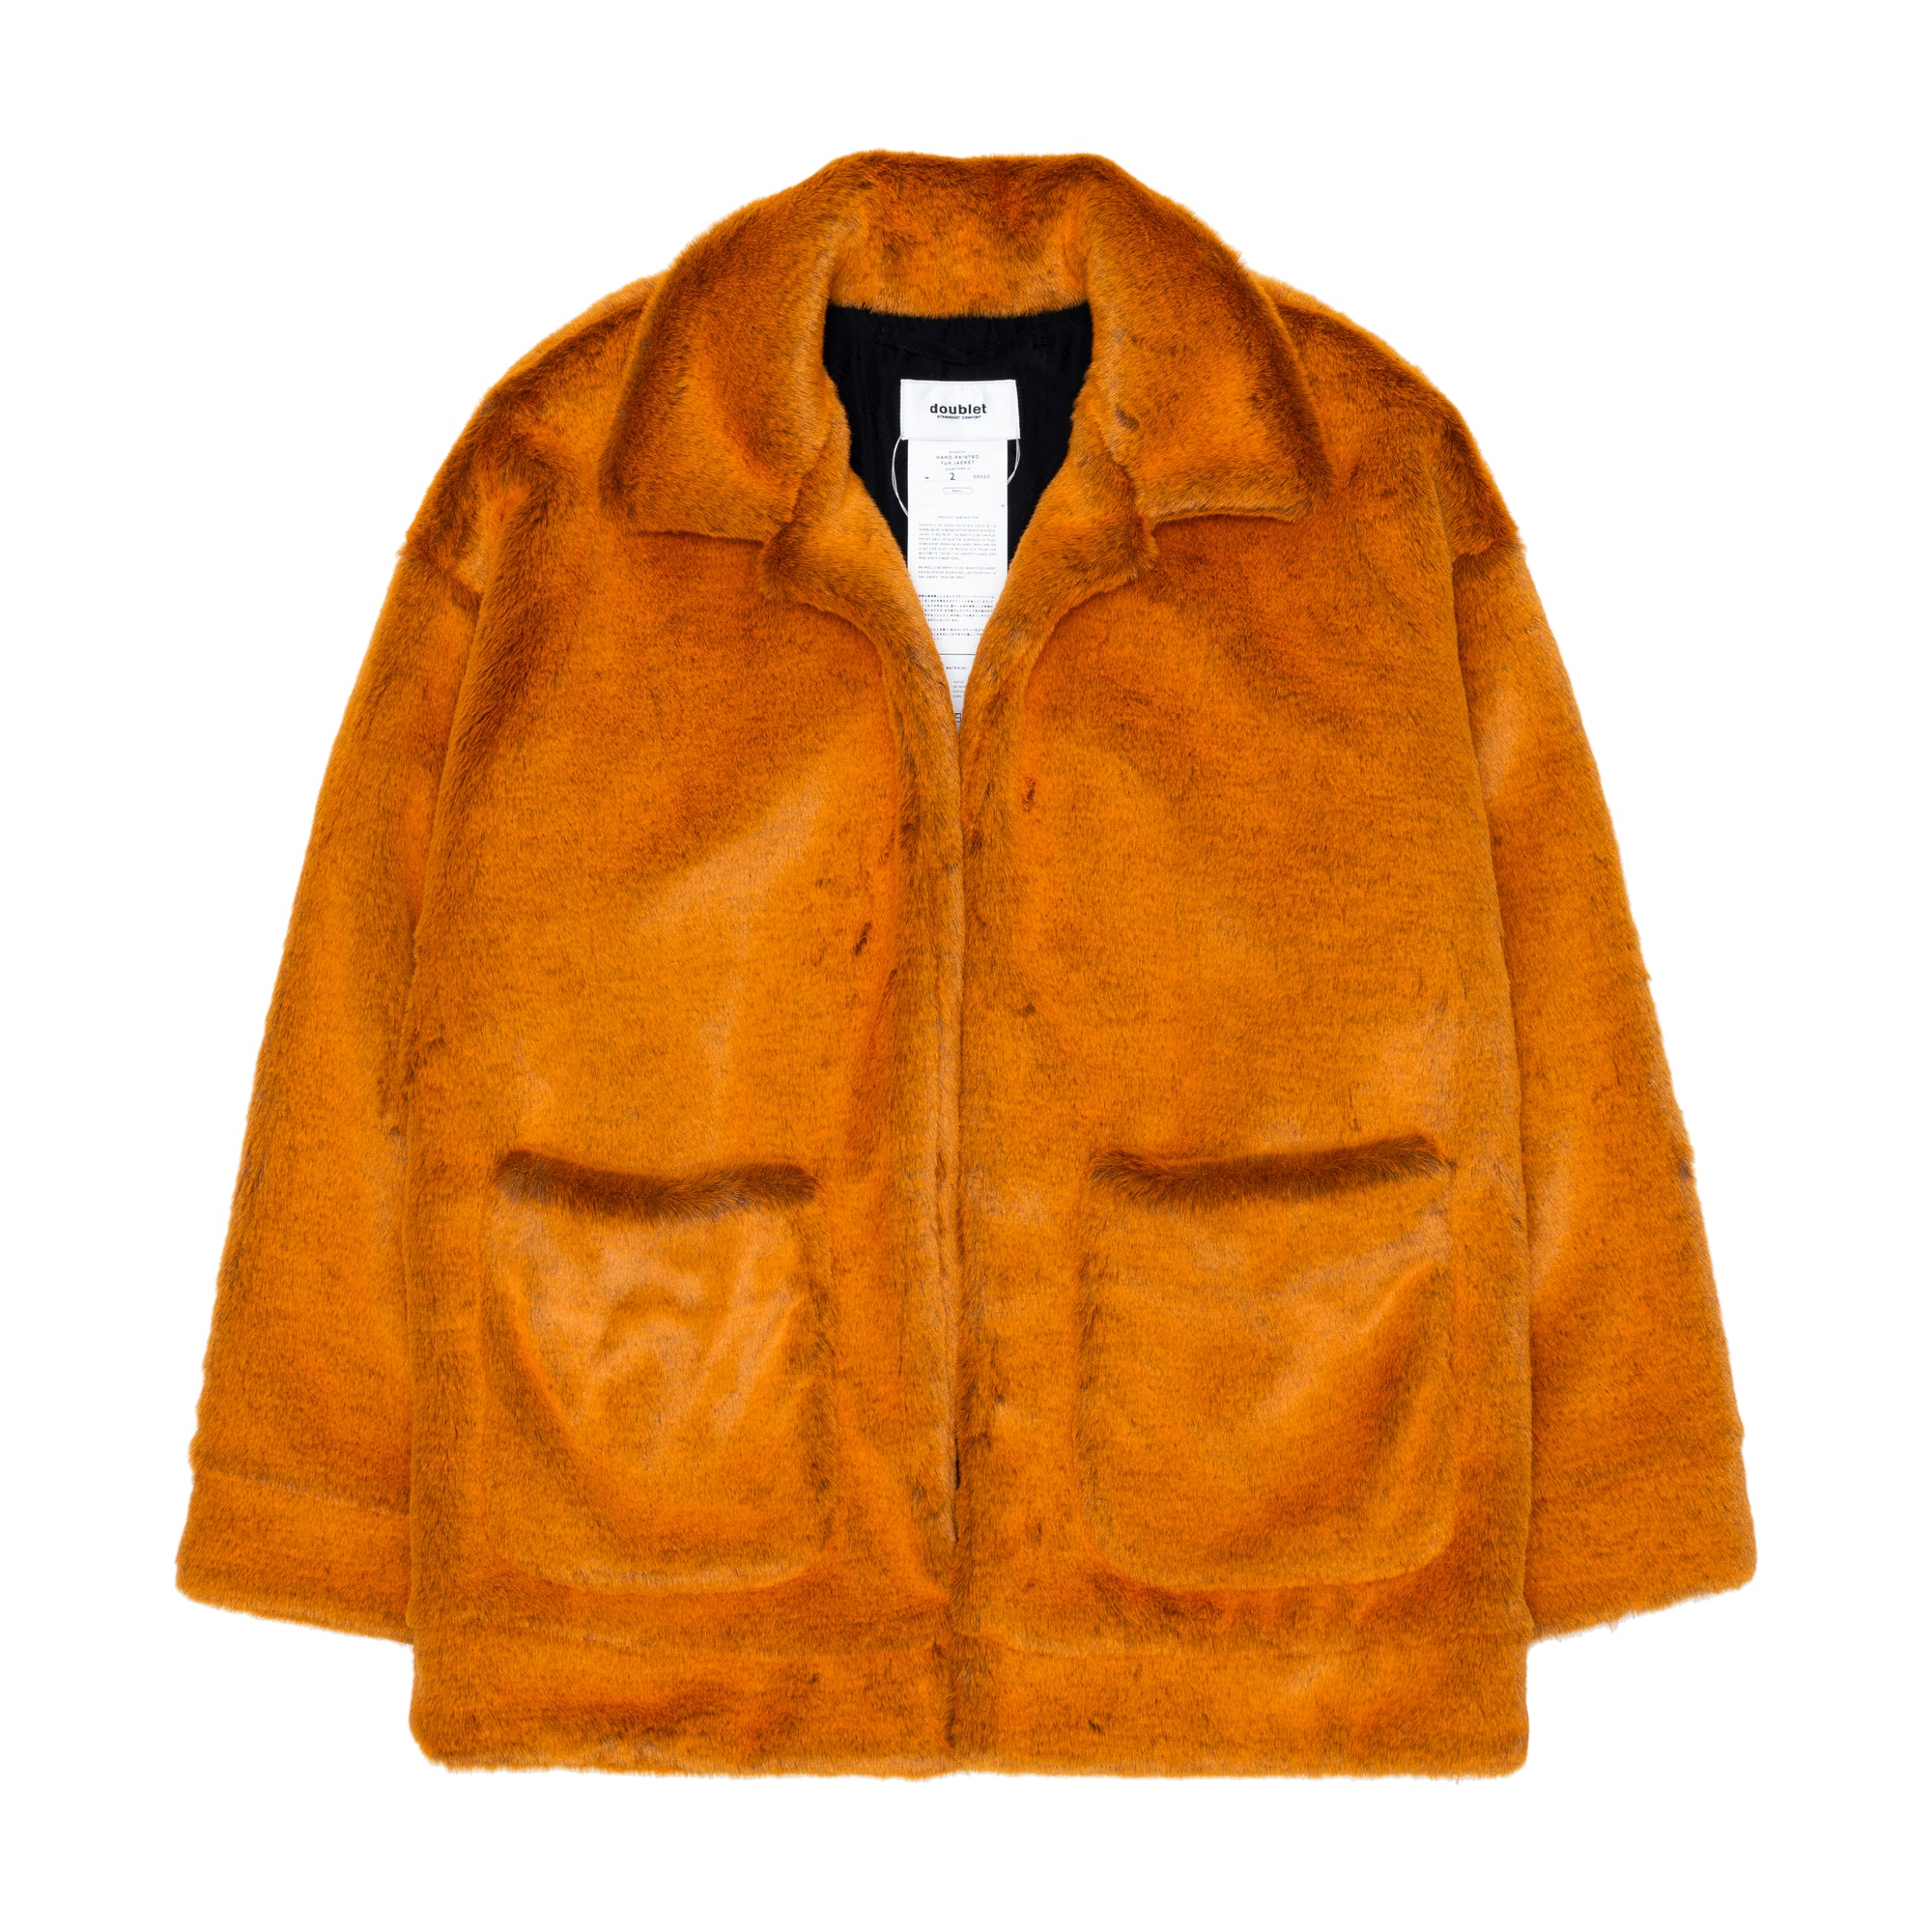 DOUBLET - Hand-Painted Fur Jacket - (Orange) view 2